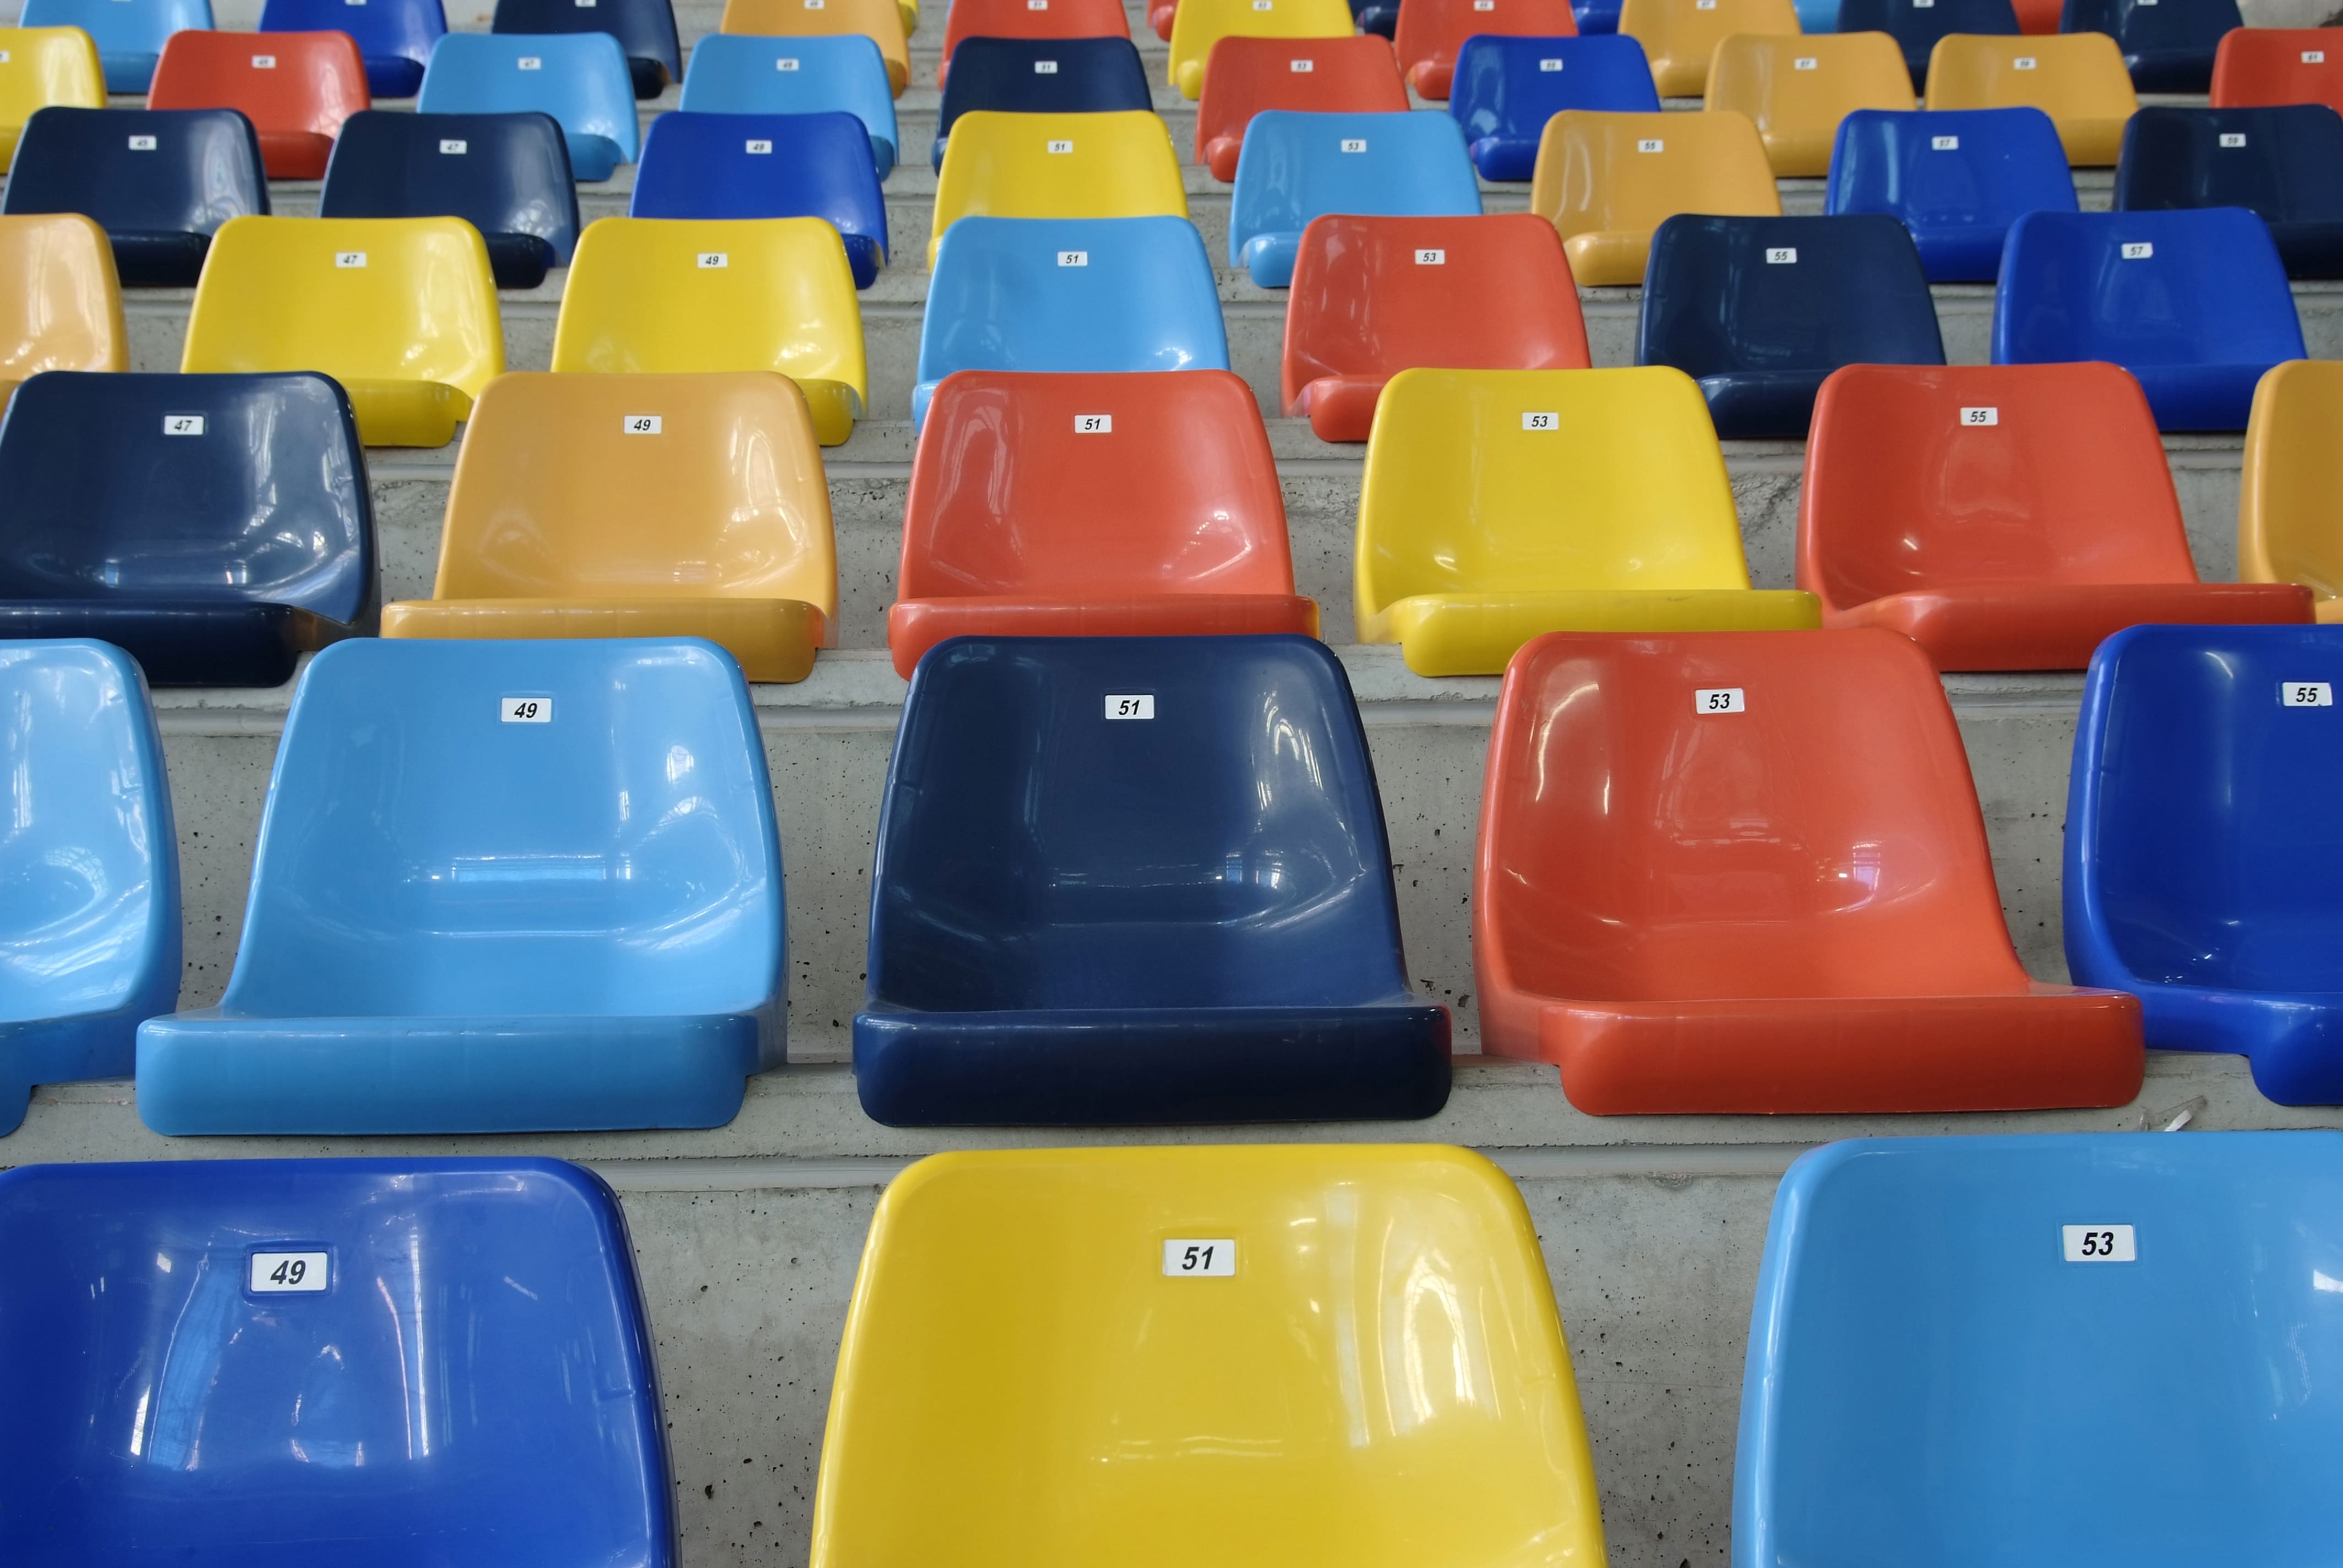 Durée de vie de sièges en installations sportives